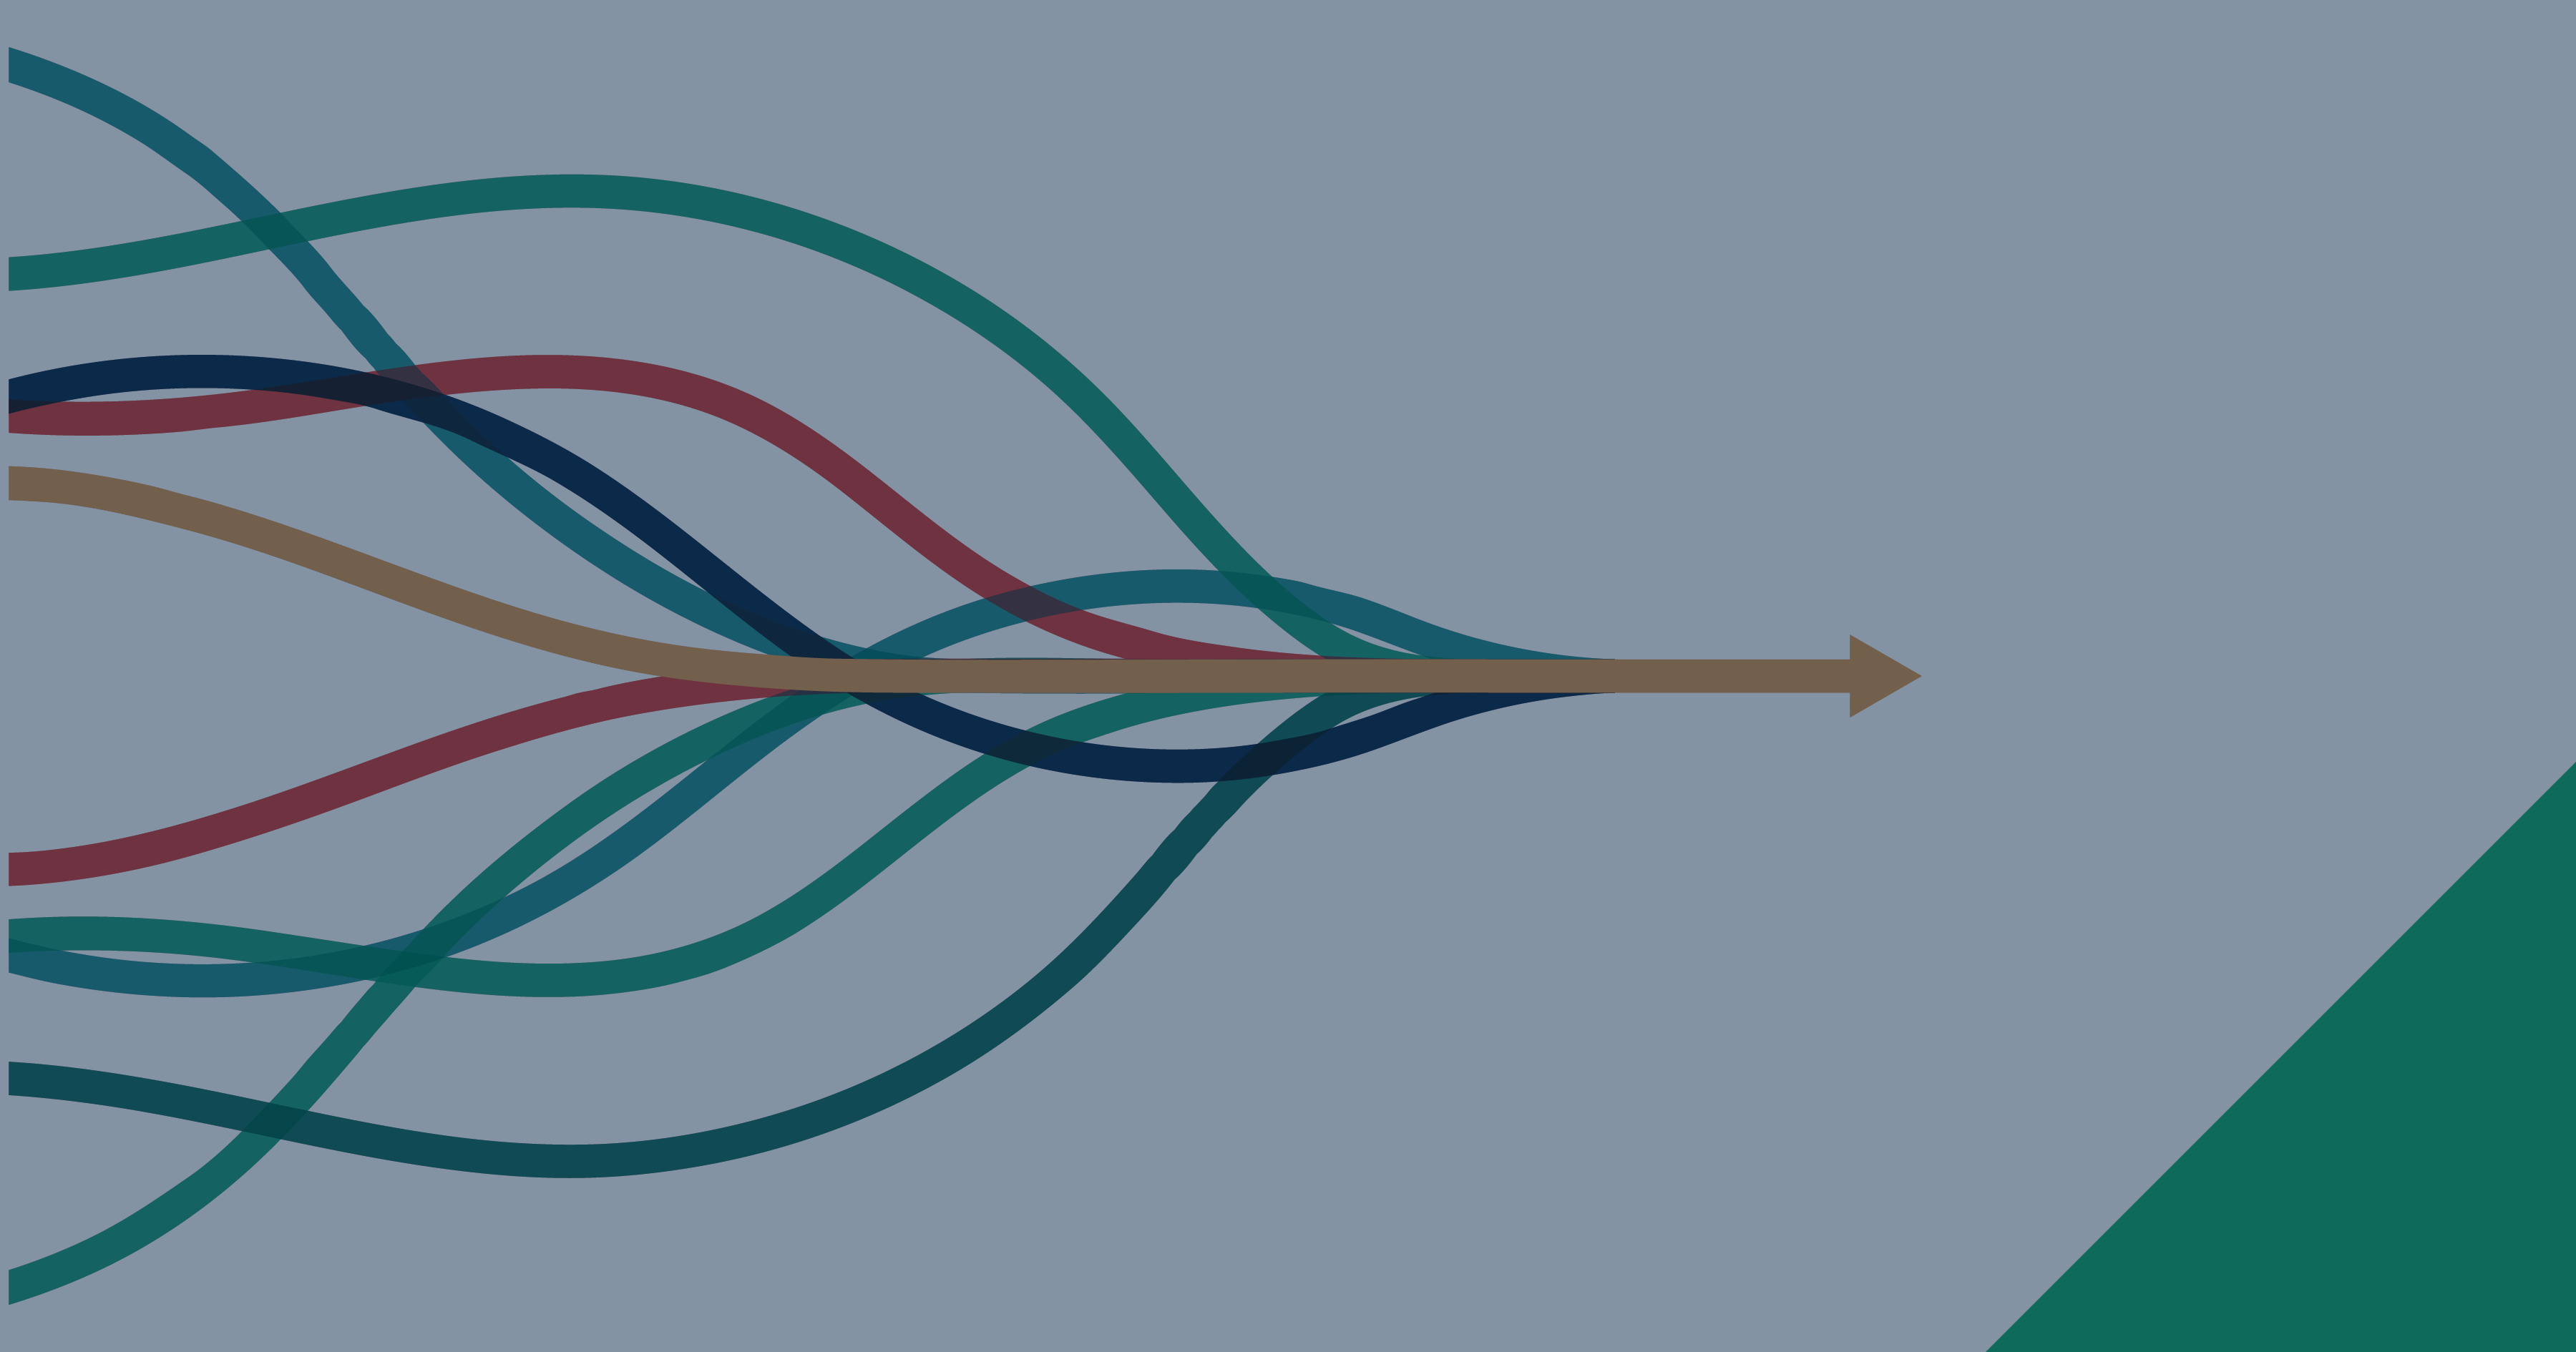 An illustration of intertwining arrows.